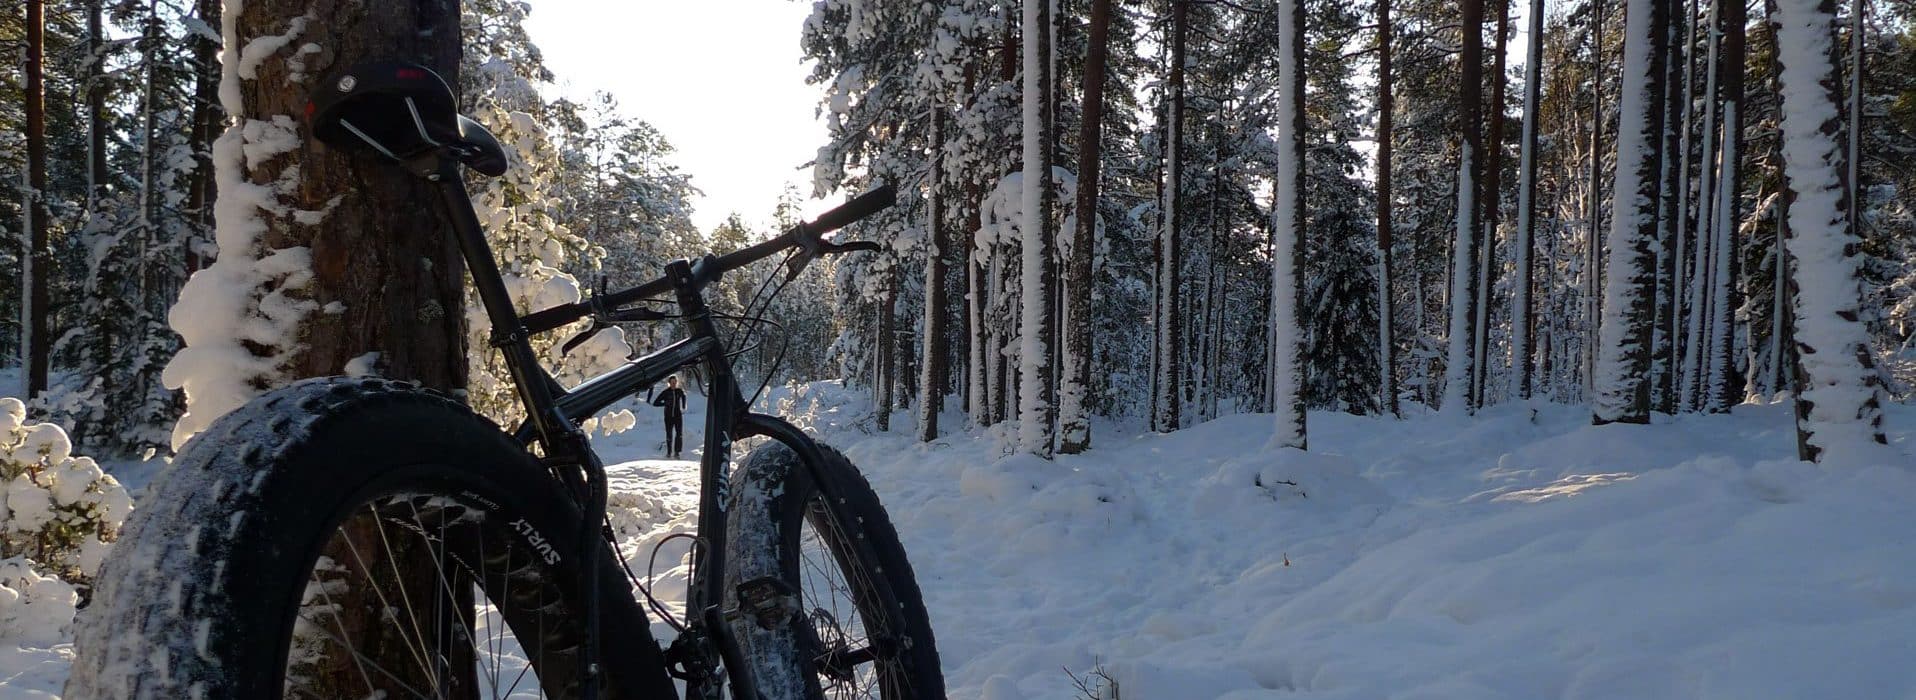 Fat biking in Vermont|Fat Bike rider on snow covered trails at Kingdom Trails Vermont